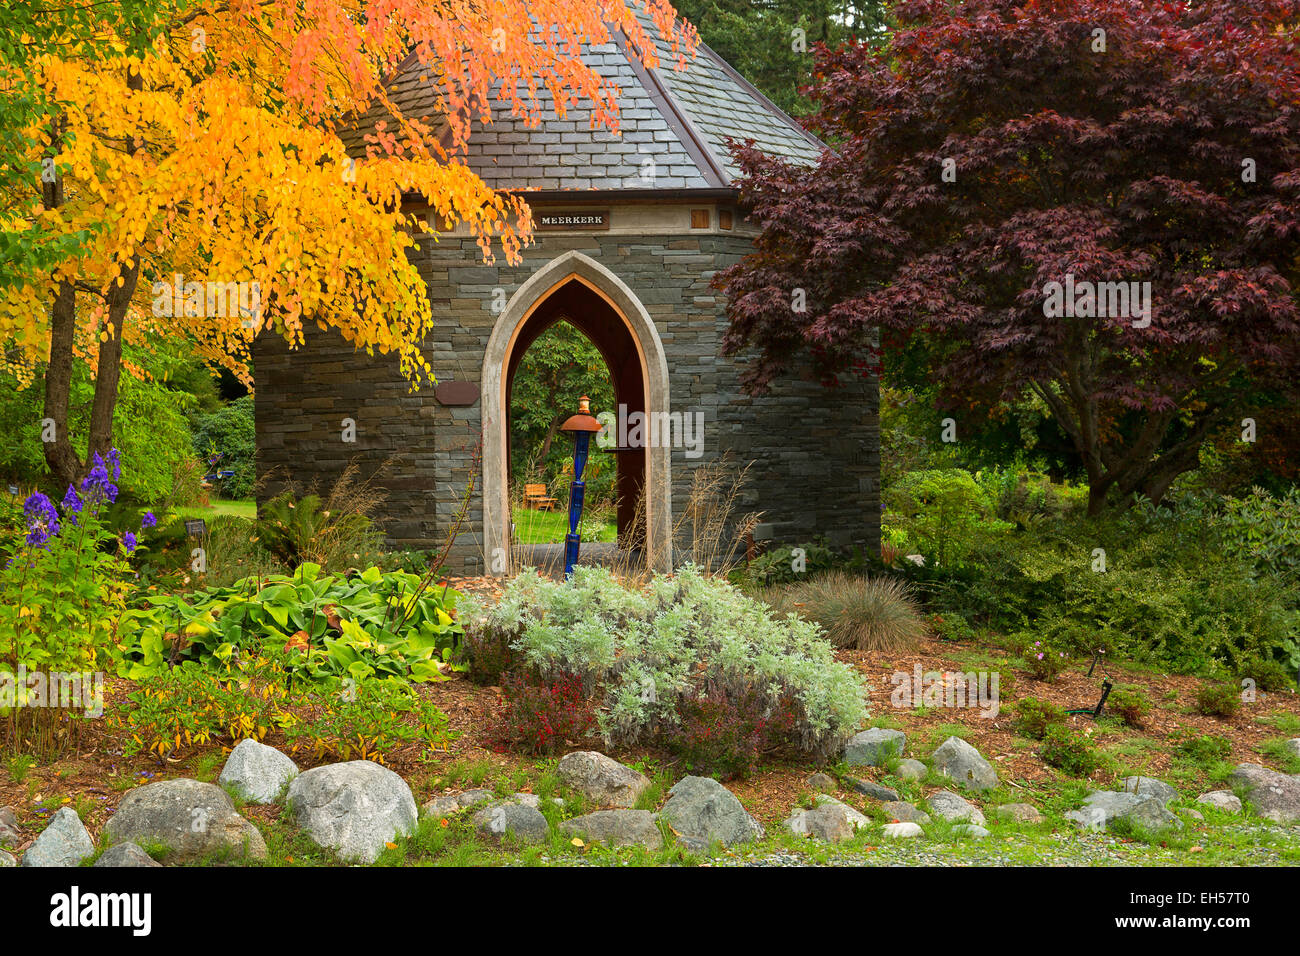 Meerkerk Gärten, Washington, fallen, Whidbey Island, Eingangstor und kiosk Stockfoto